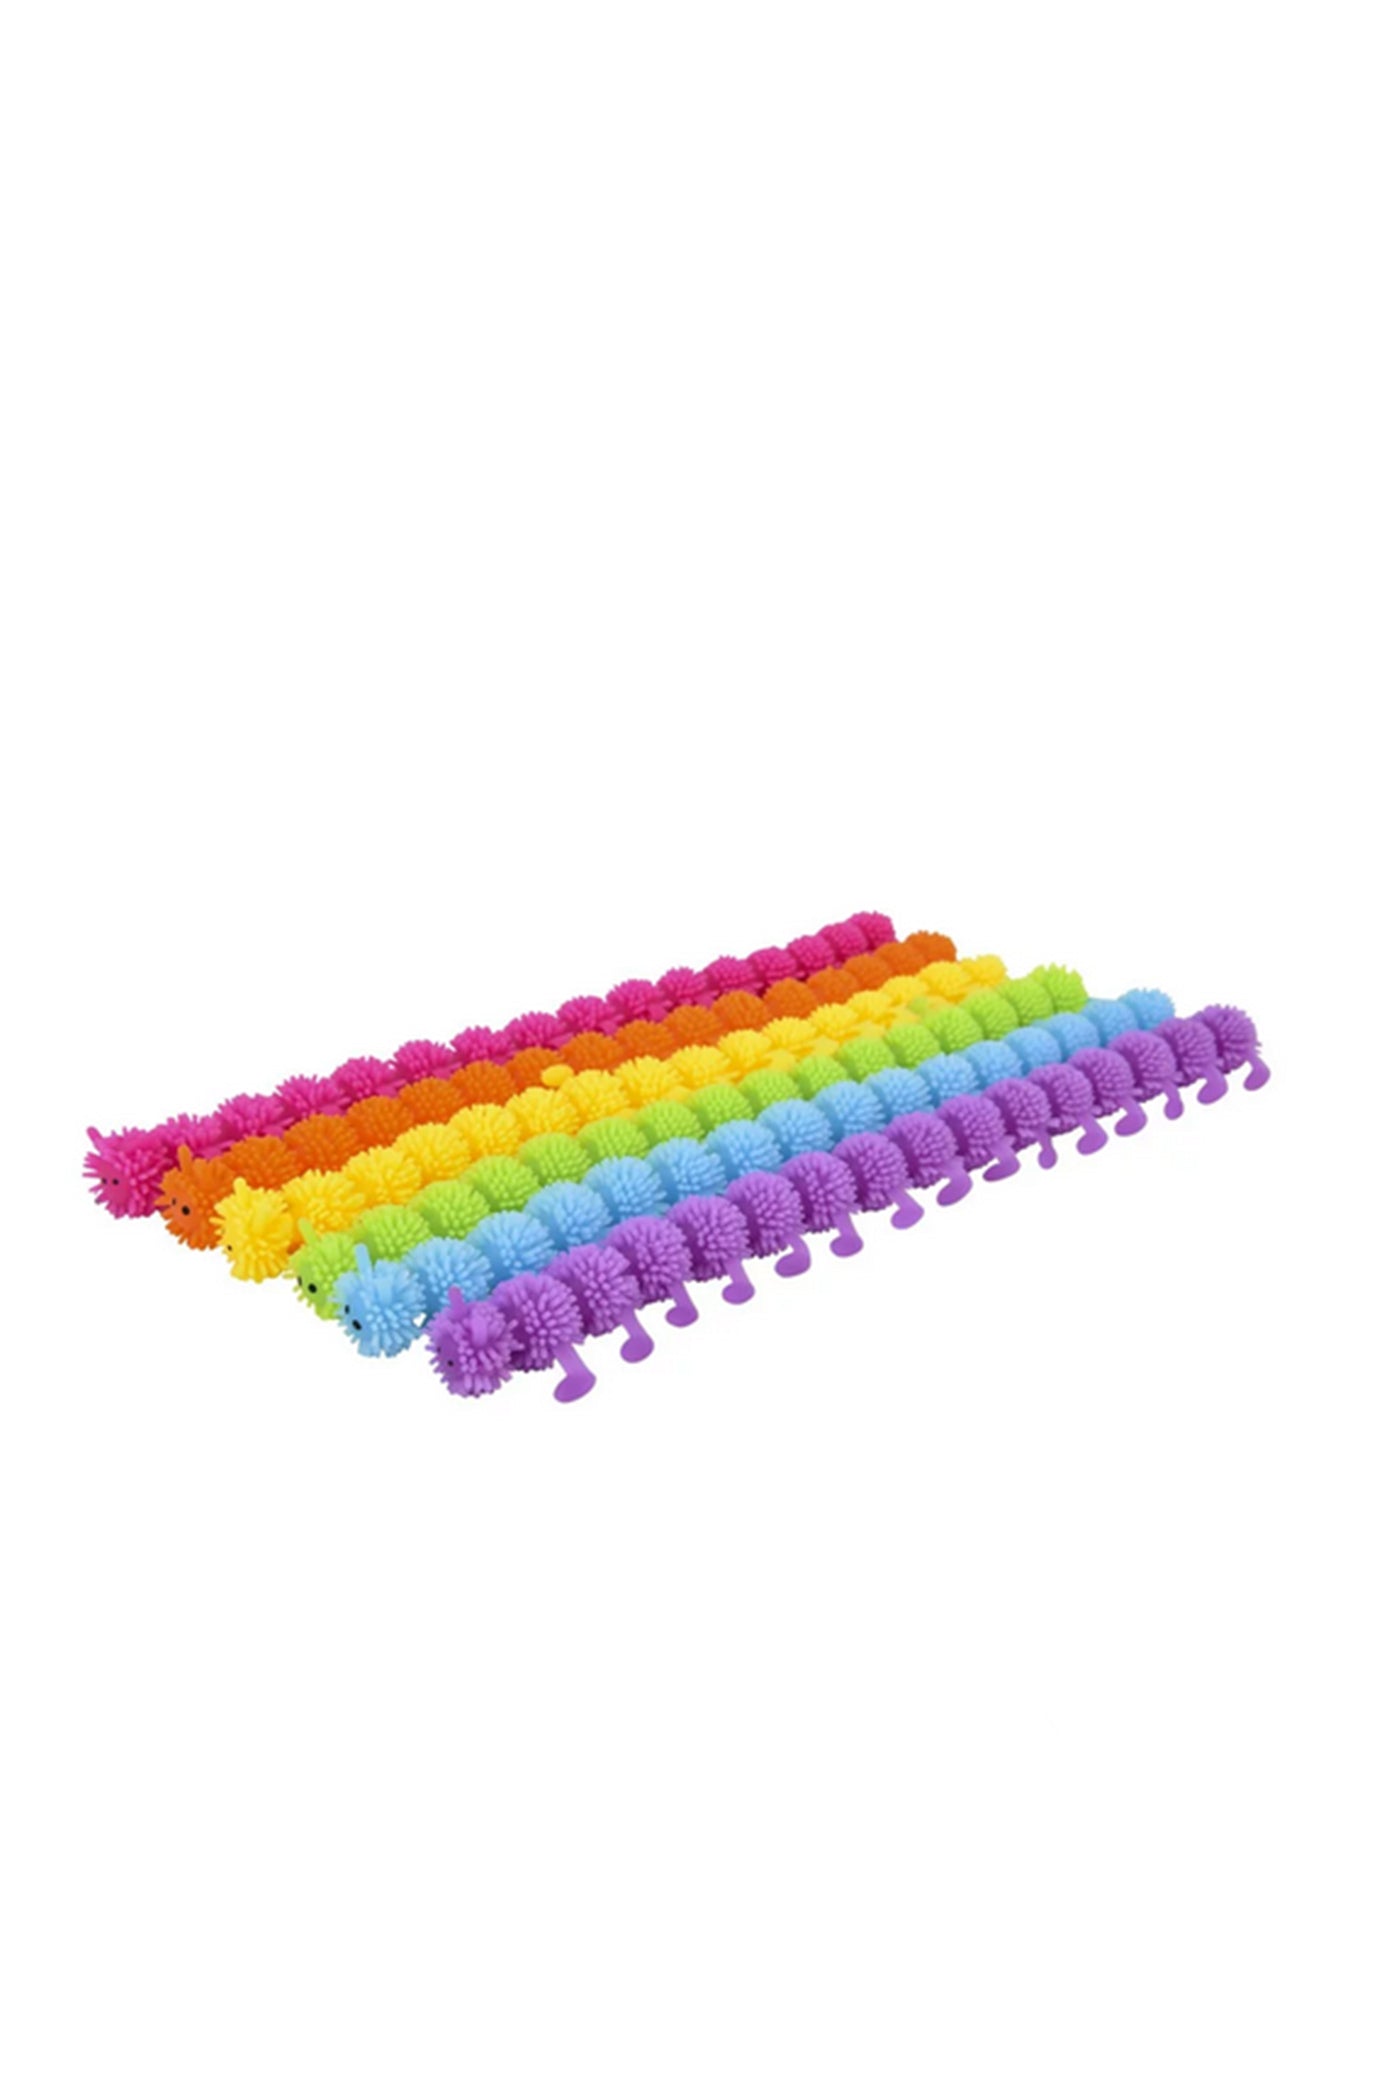 Rainbow Catepillar Stretchy String